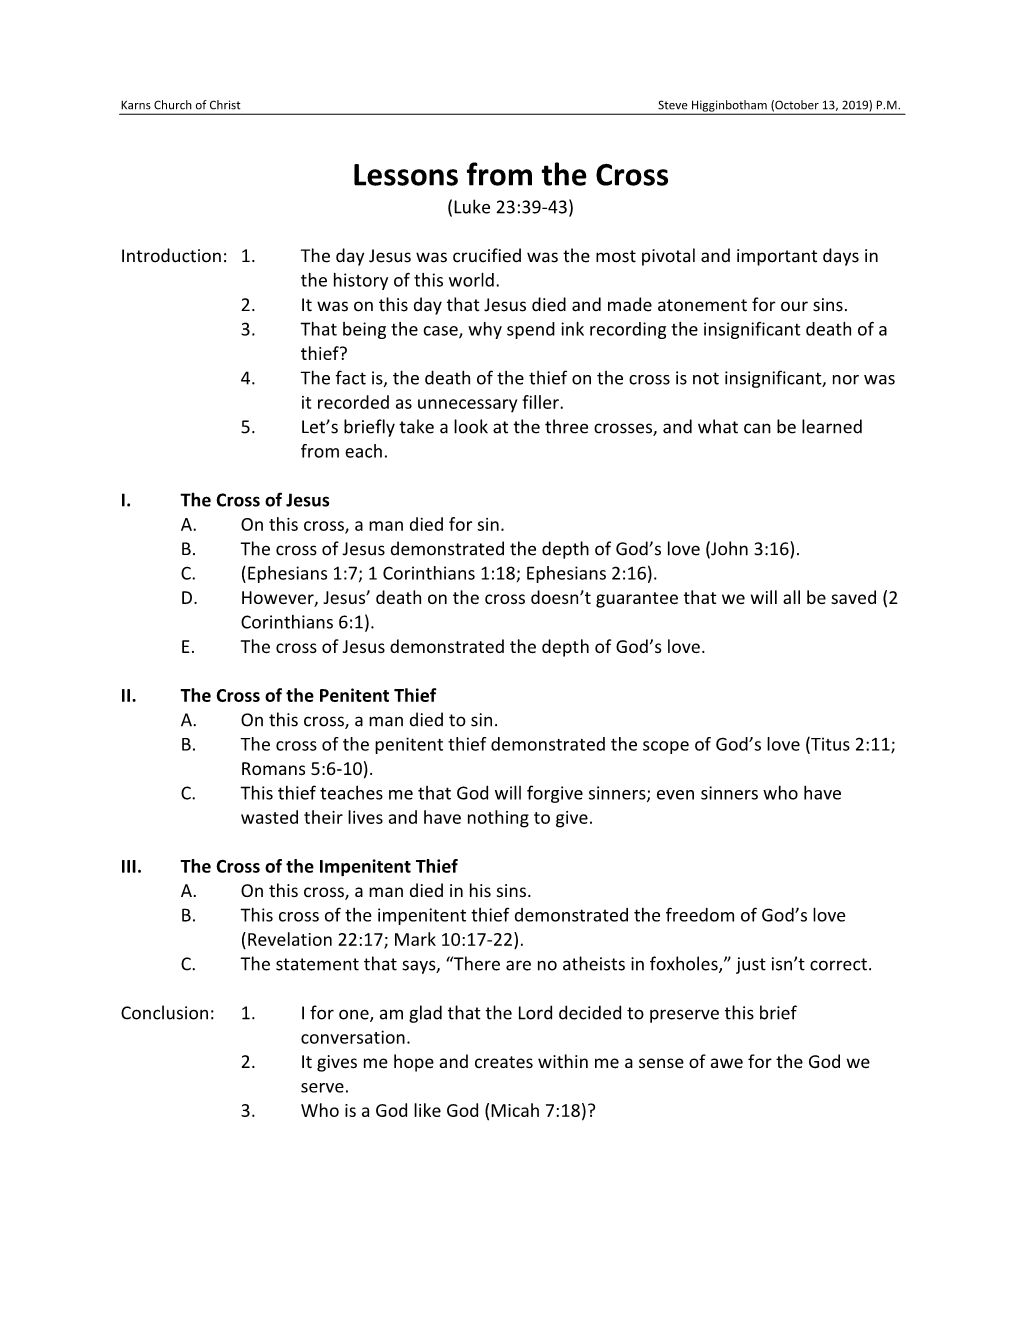 Lessons from the Cross (Luke 23:39-43)